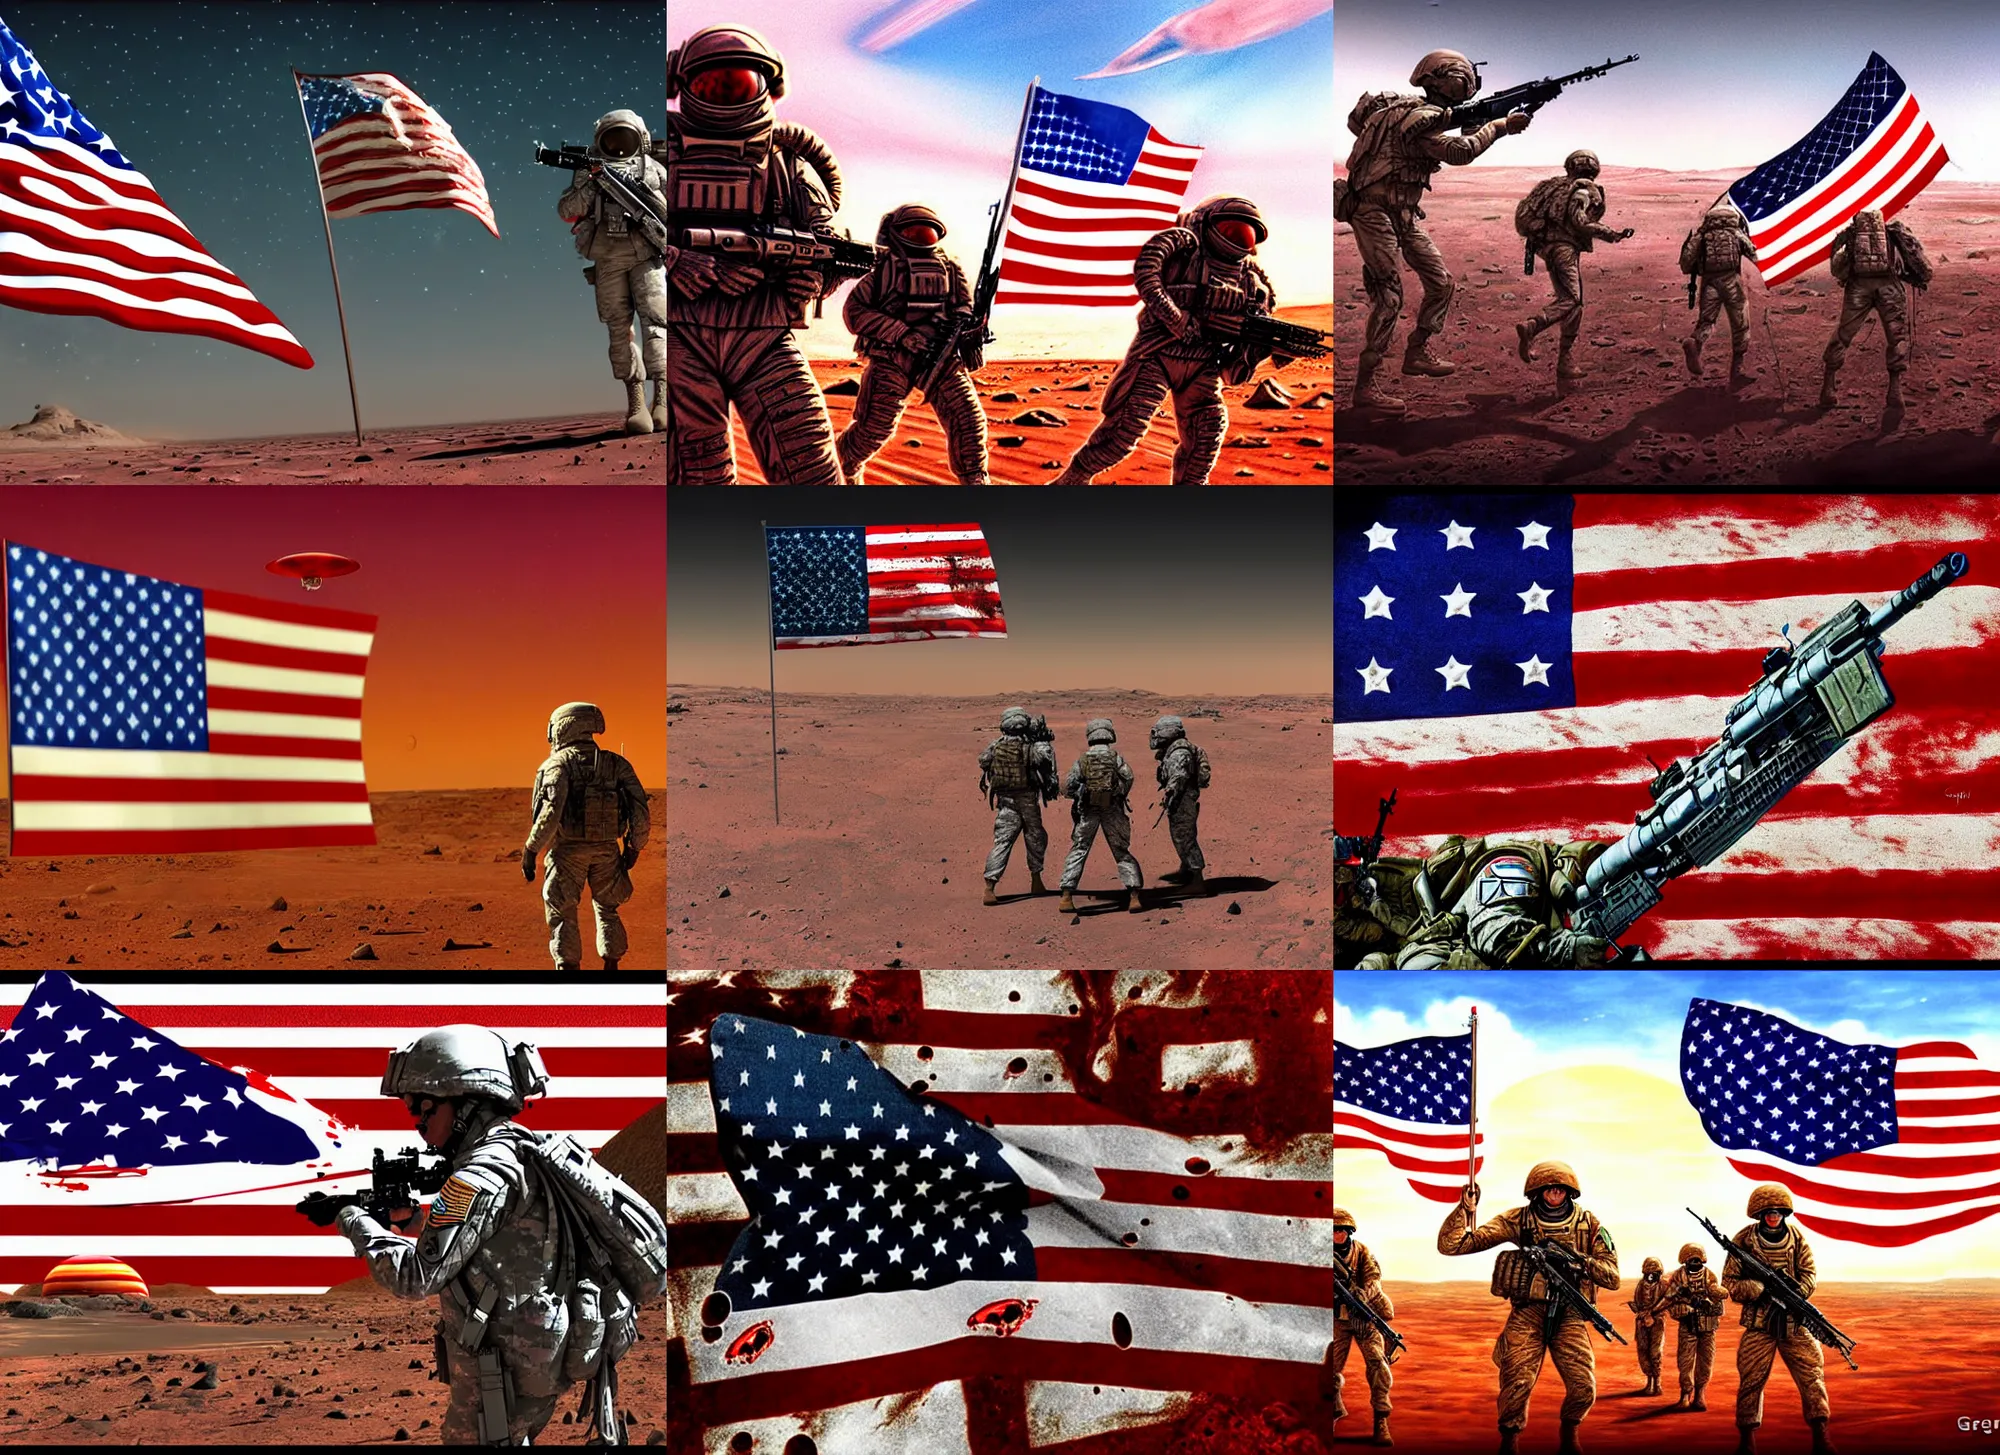 Prompt: american soldiers invaded mars, dead peaceful aliens, raised a bloody american flag, realistic 4 k, war digital art by greg ritkowski